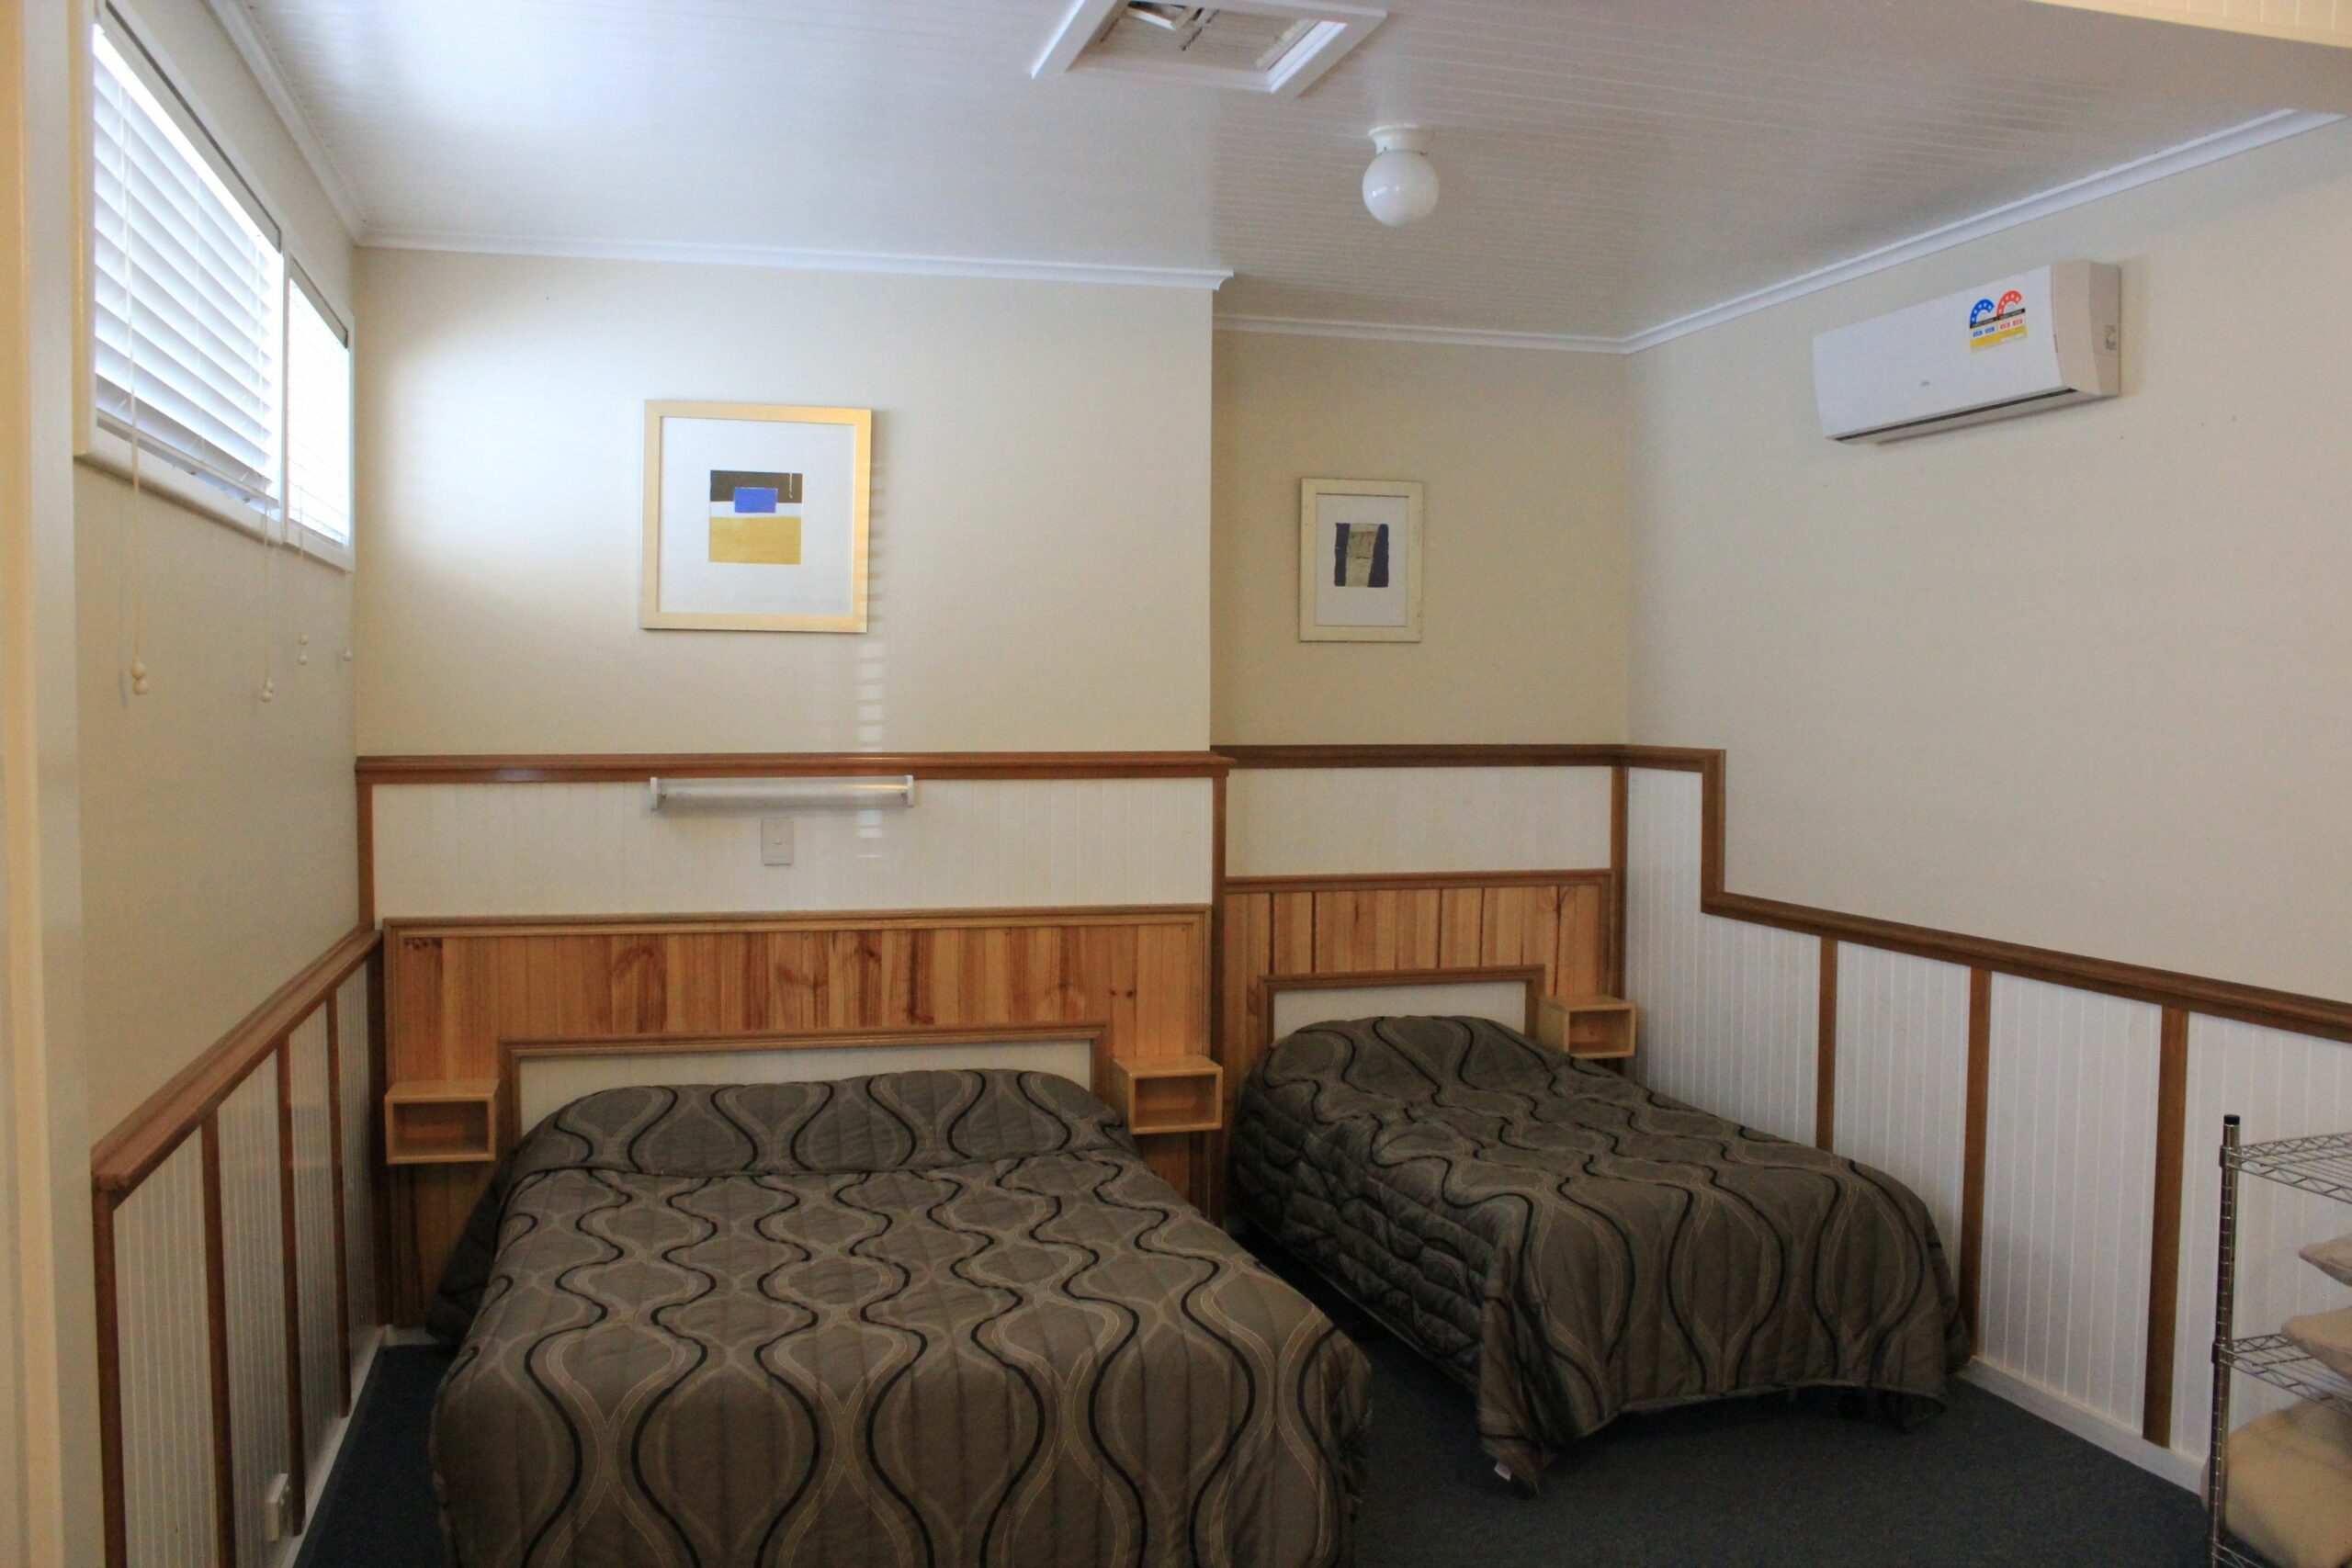 Tamworth Lodge Motel